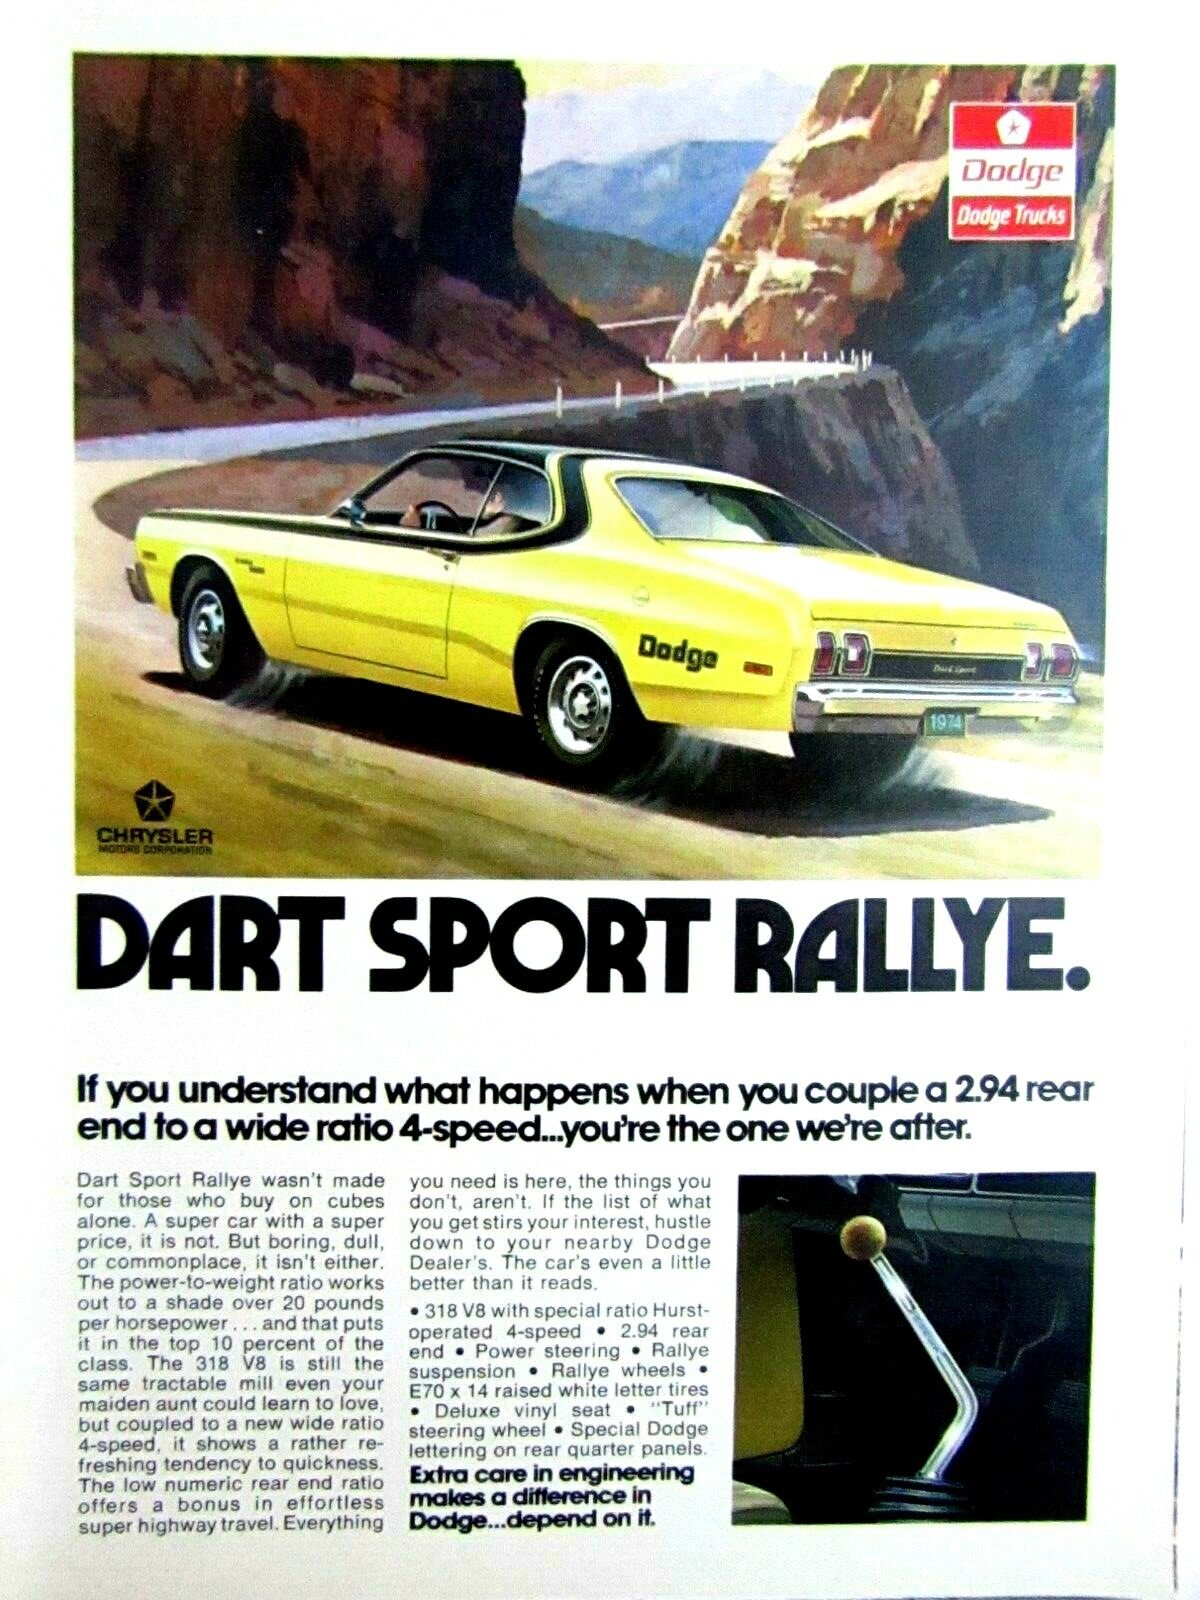 1974 Dodge Dart Sport Rallye 4 Speed Vintage Original Print Ad 8.5 x 11\